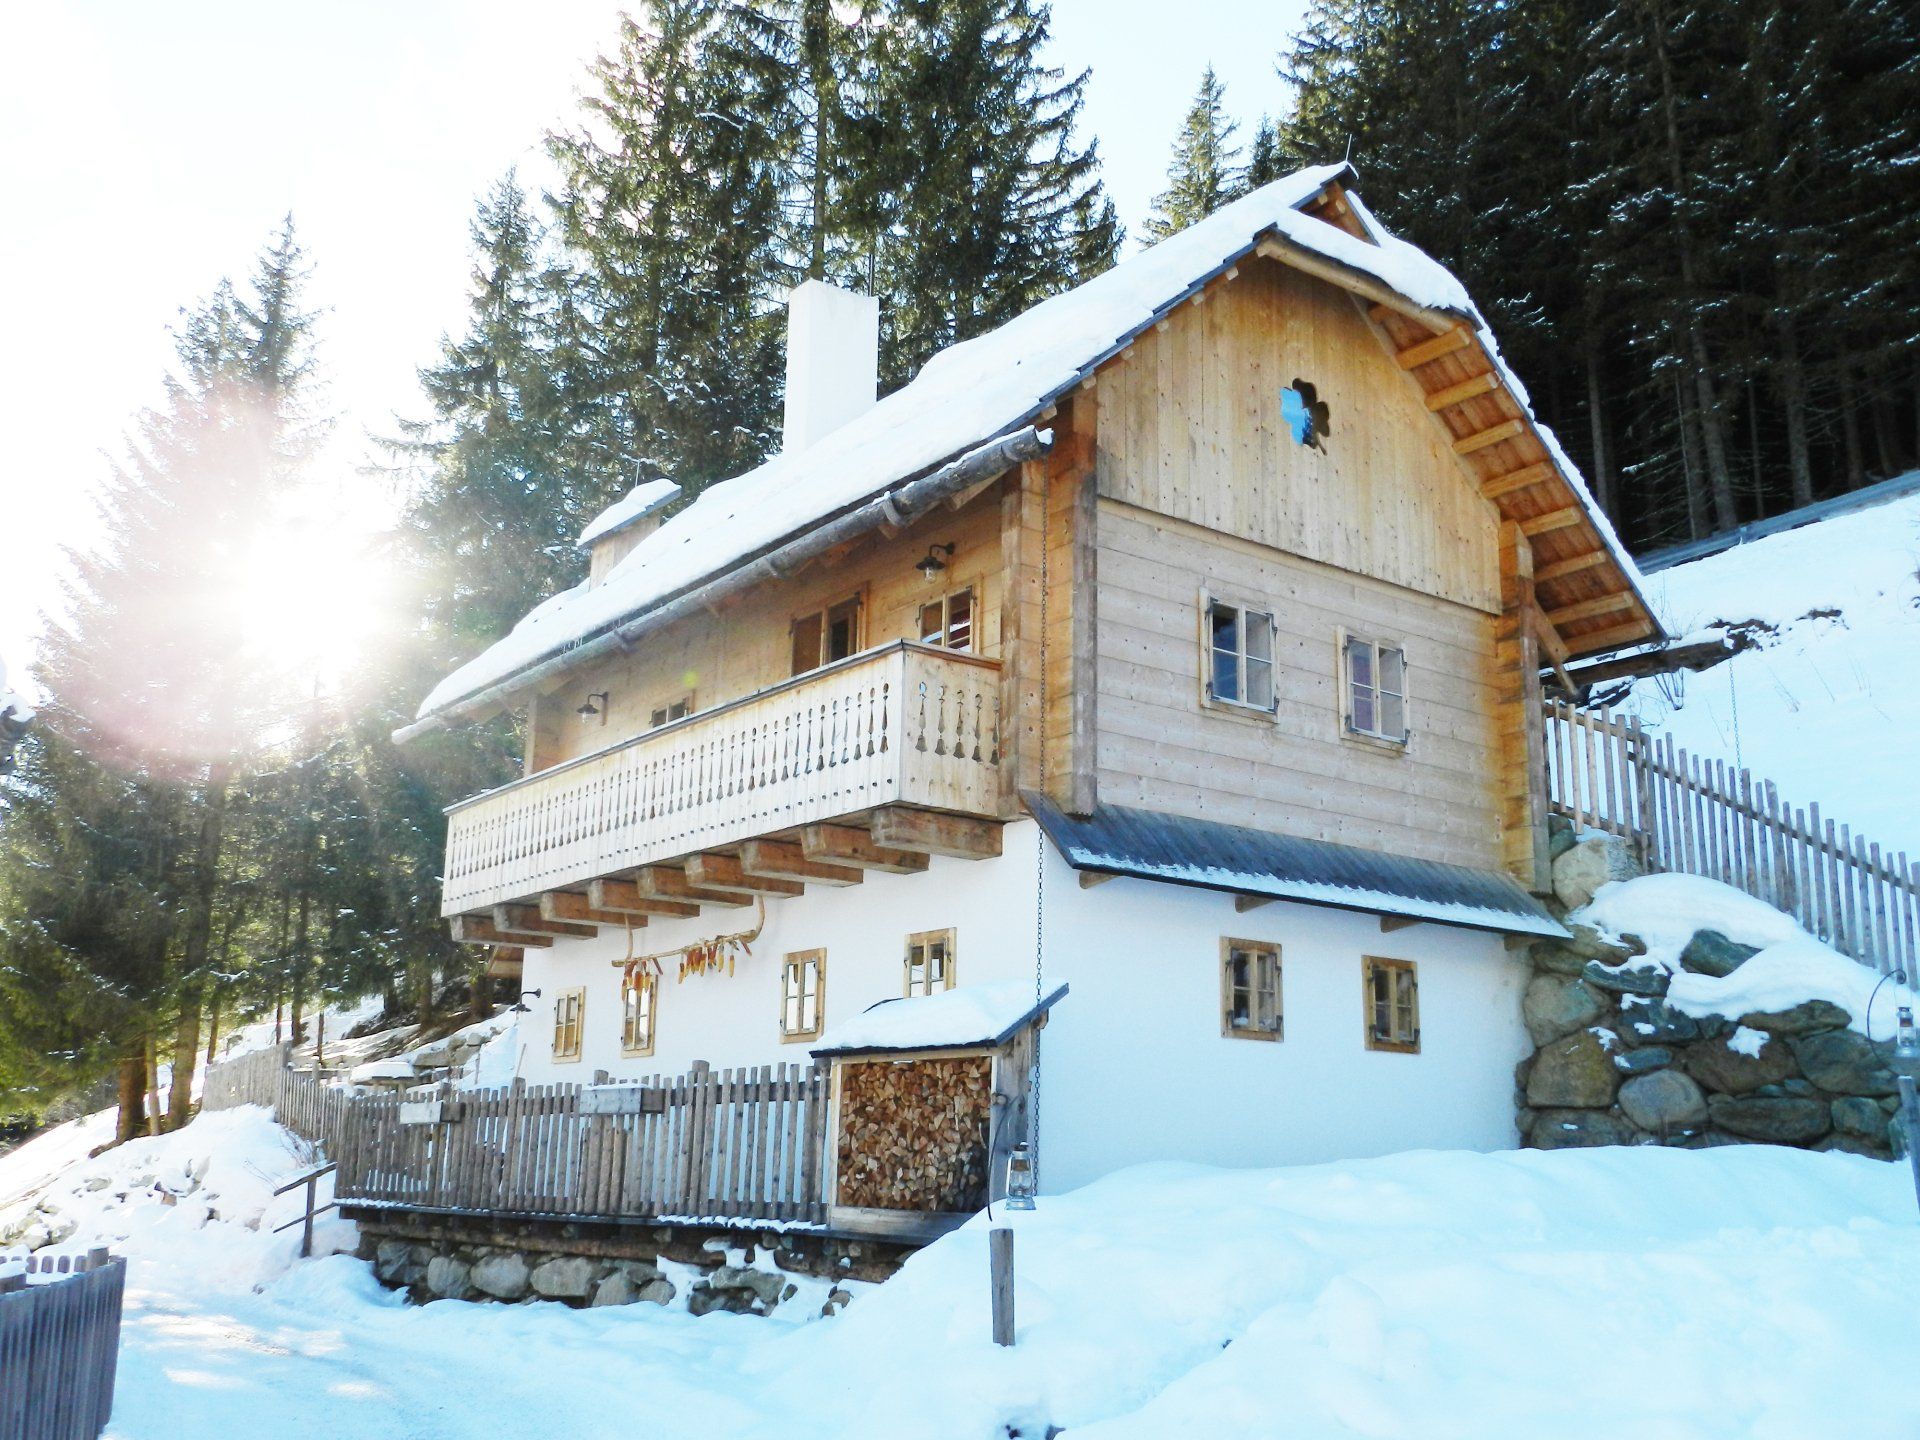 Austria Alps Ski Destination, House Covered in Snow - Ski Holidays Destinations Barter's Travelnet